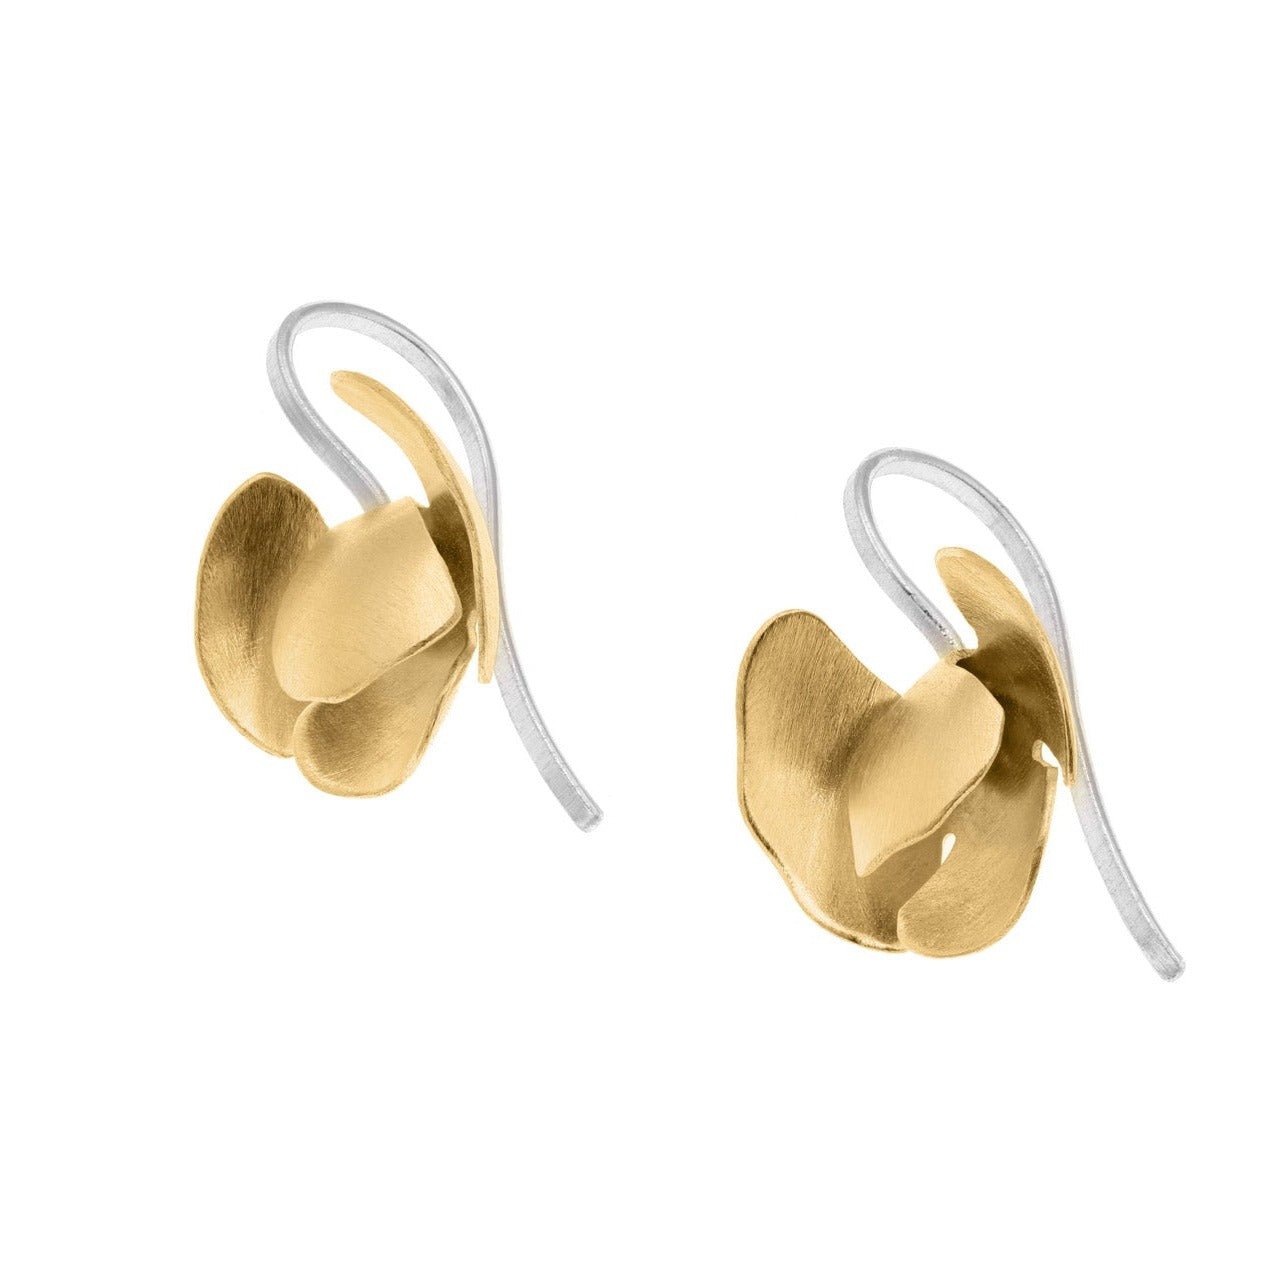 gold orchid earrings - The Nancy Smillie Shop - Art, Jewellery & Designer Gifts Glasgow